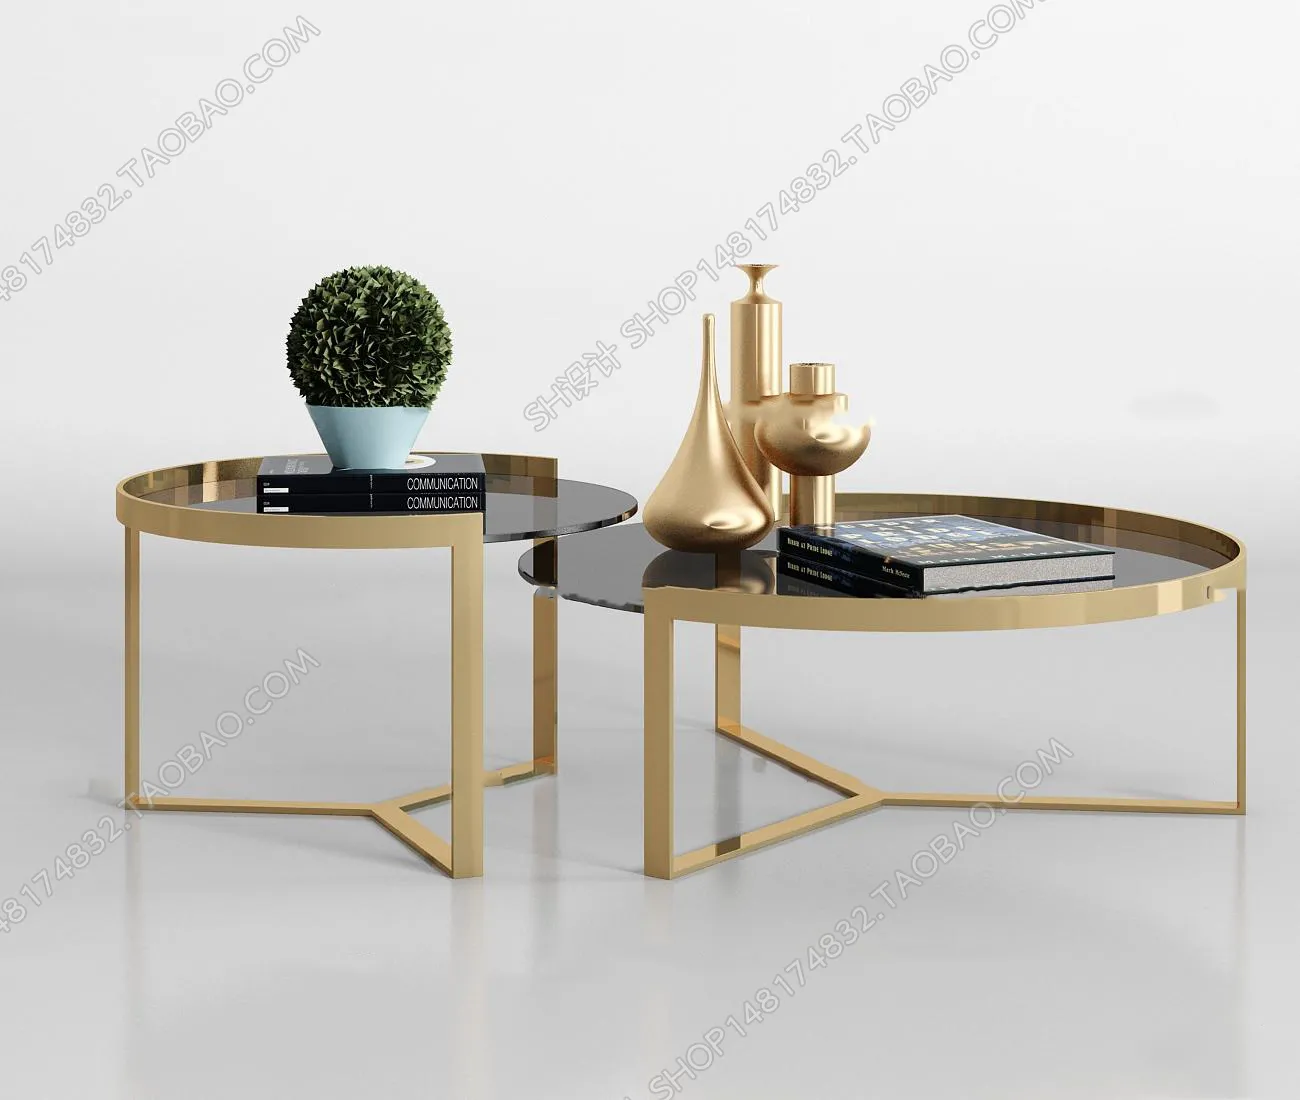 3DSKY MODELS – COFFEE TABLE 3D MODELS – 020